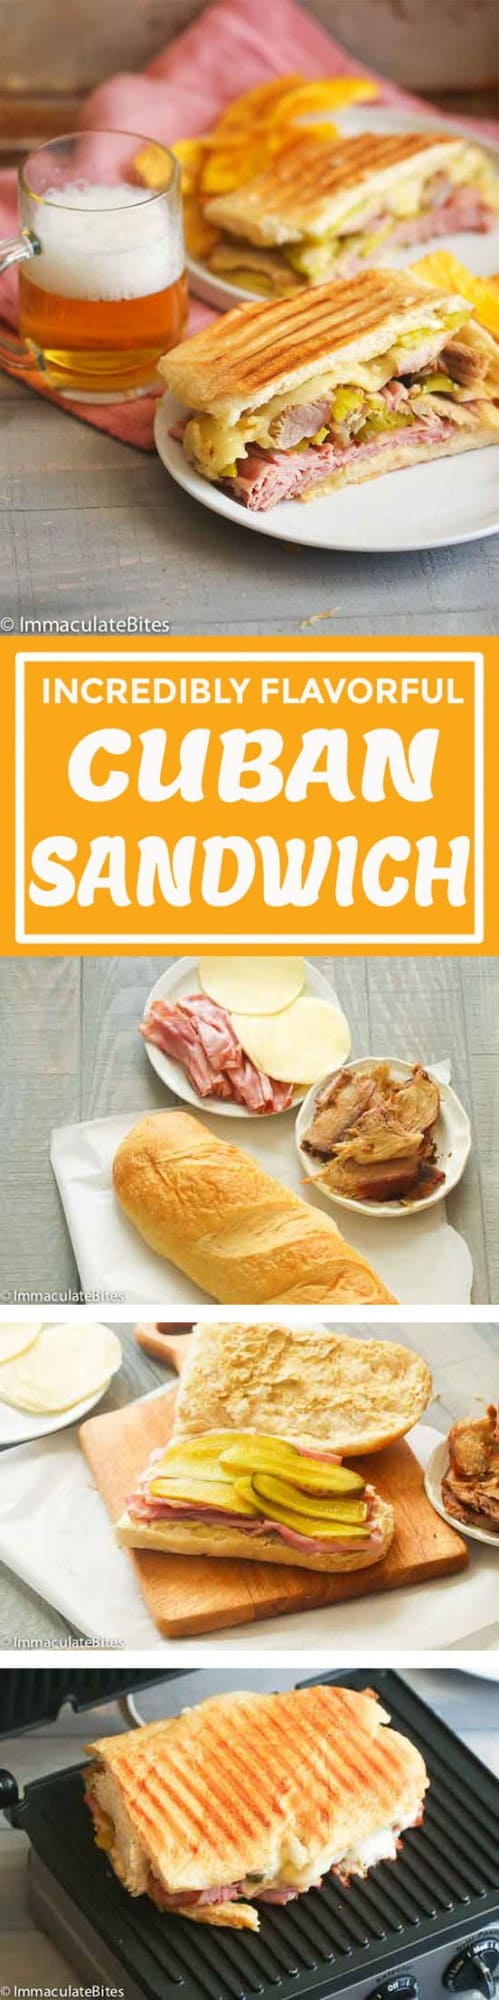 Cuban Sandwich - Immaculate Bites